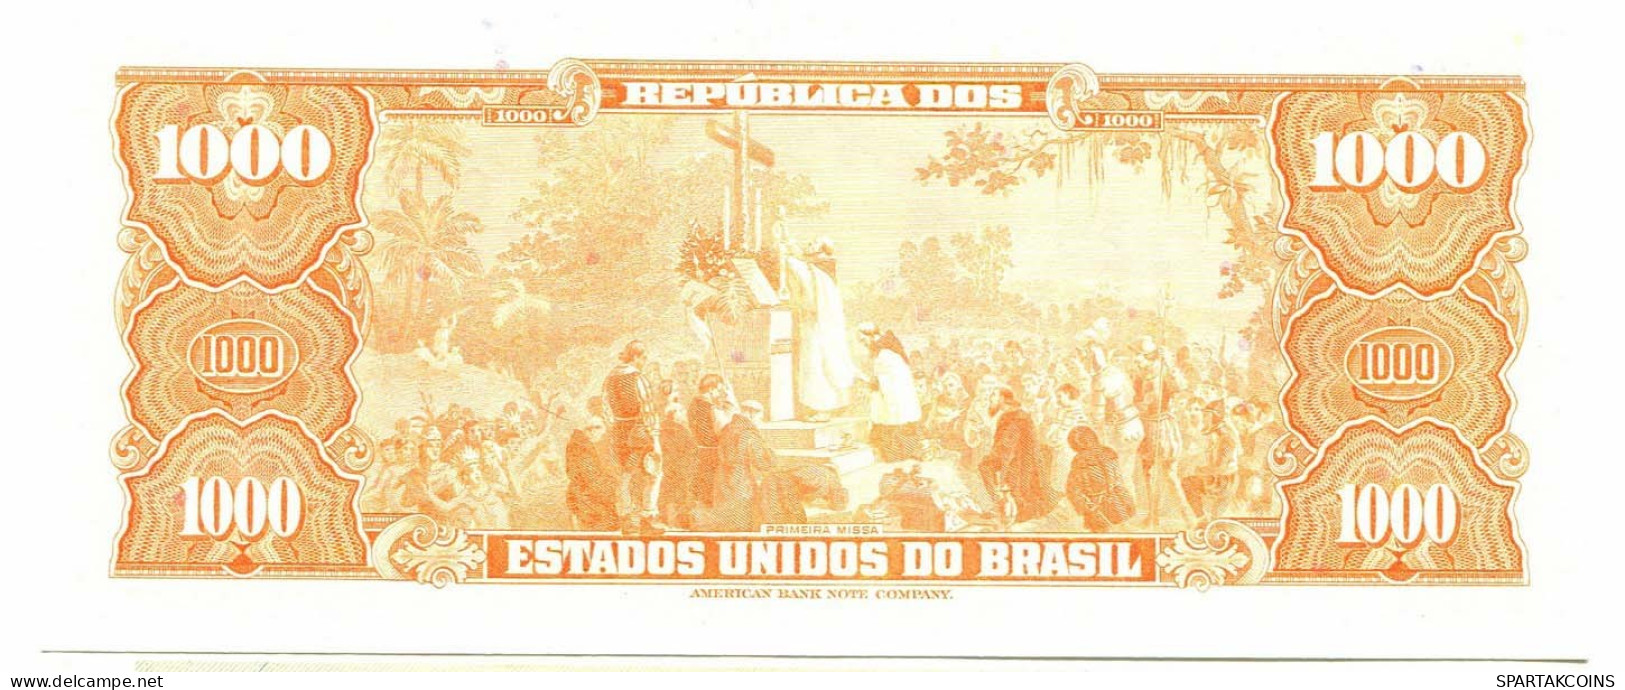 BRASIL 1000 CRUZEIROS 1963 SERIE 4521A UNC Paper Money Banknote #P10870.4 - Lokale Ausgaben